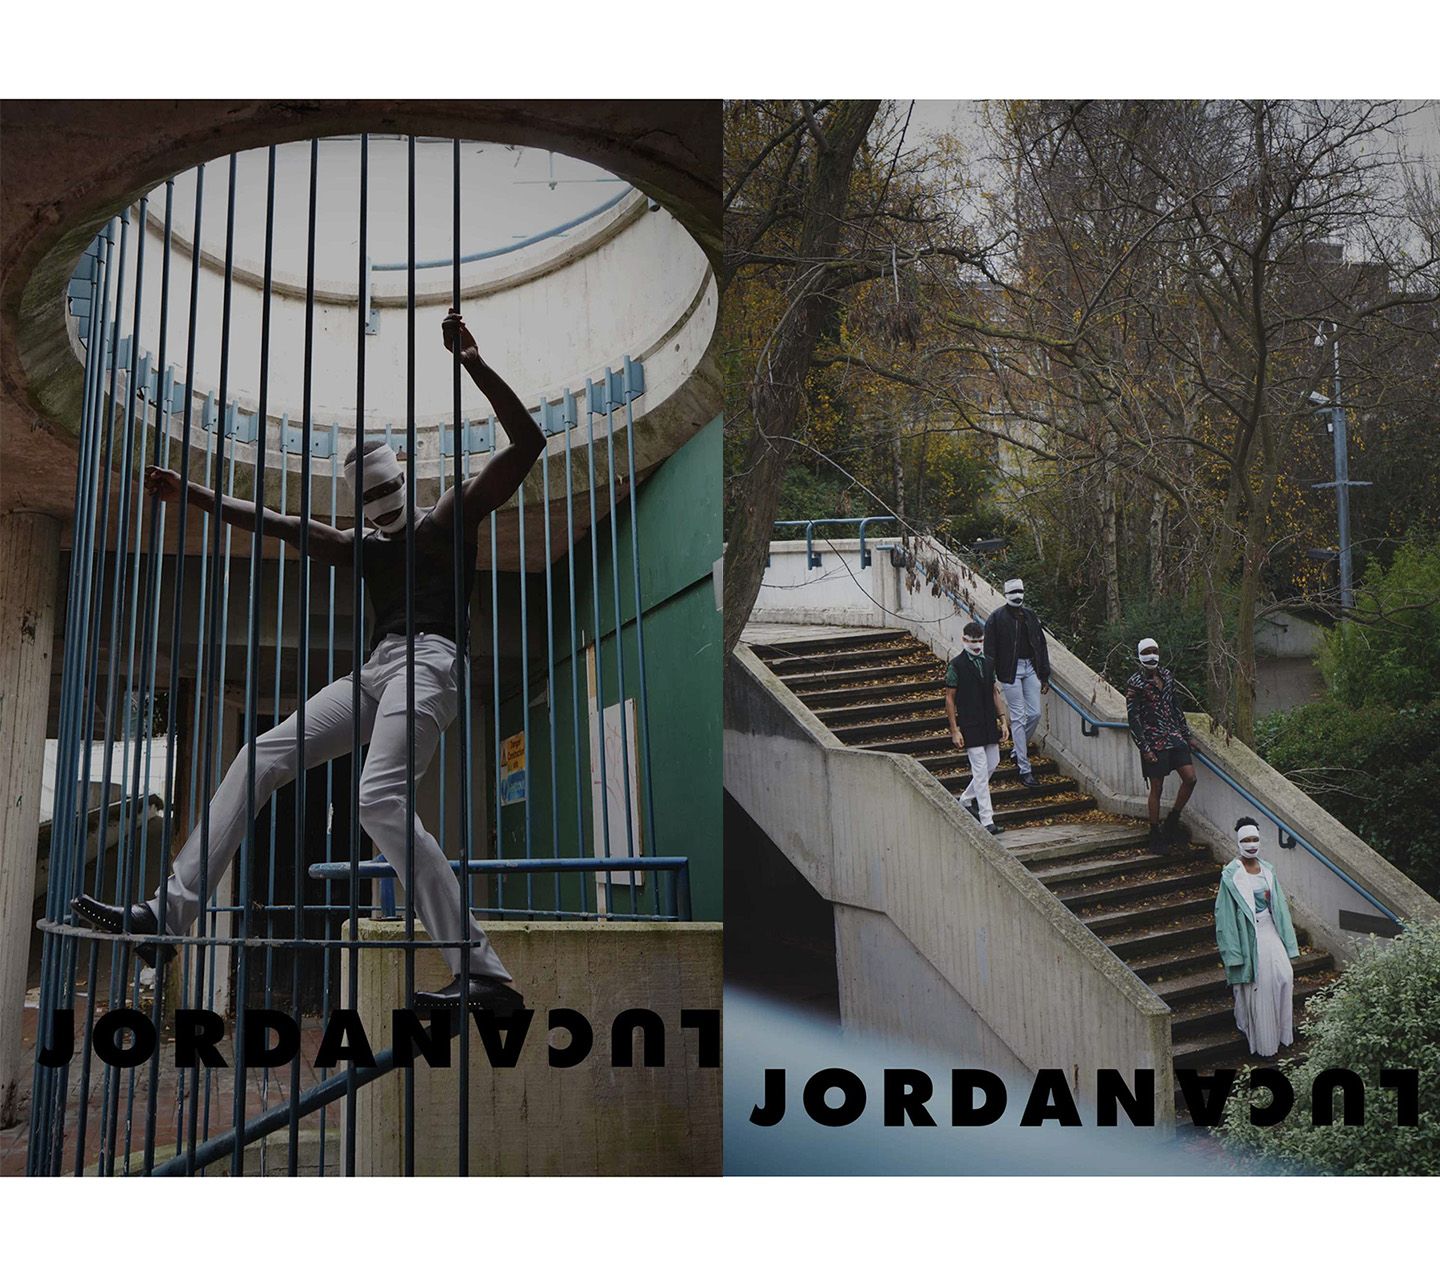 JordanLuca s-s 22 collection as seen by Istituto Marangoni student Tetiana Kerauchenko